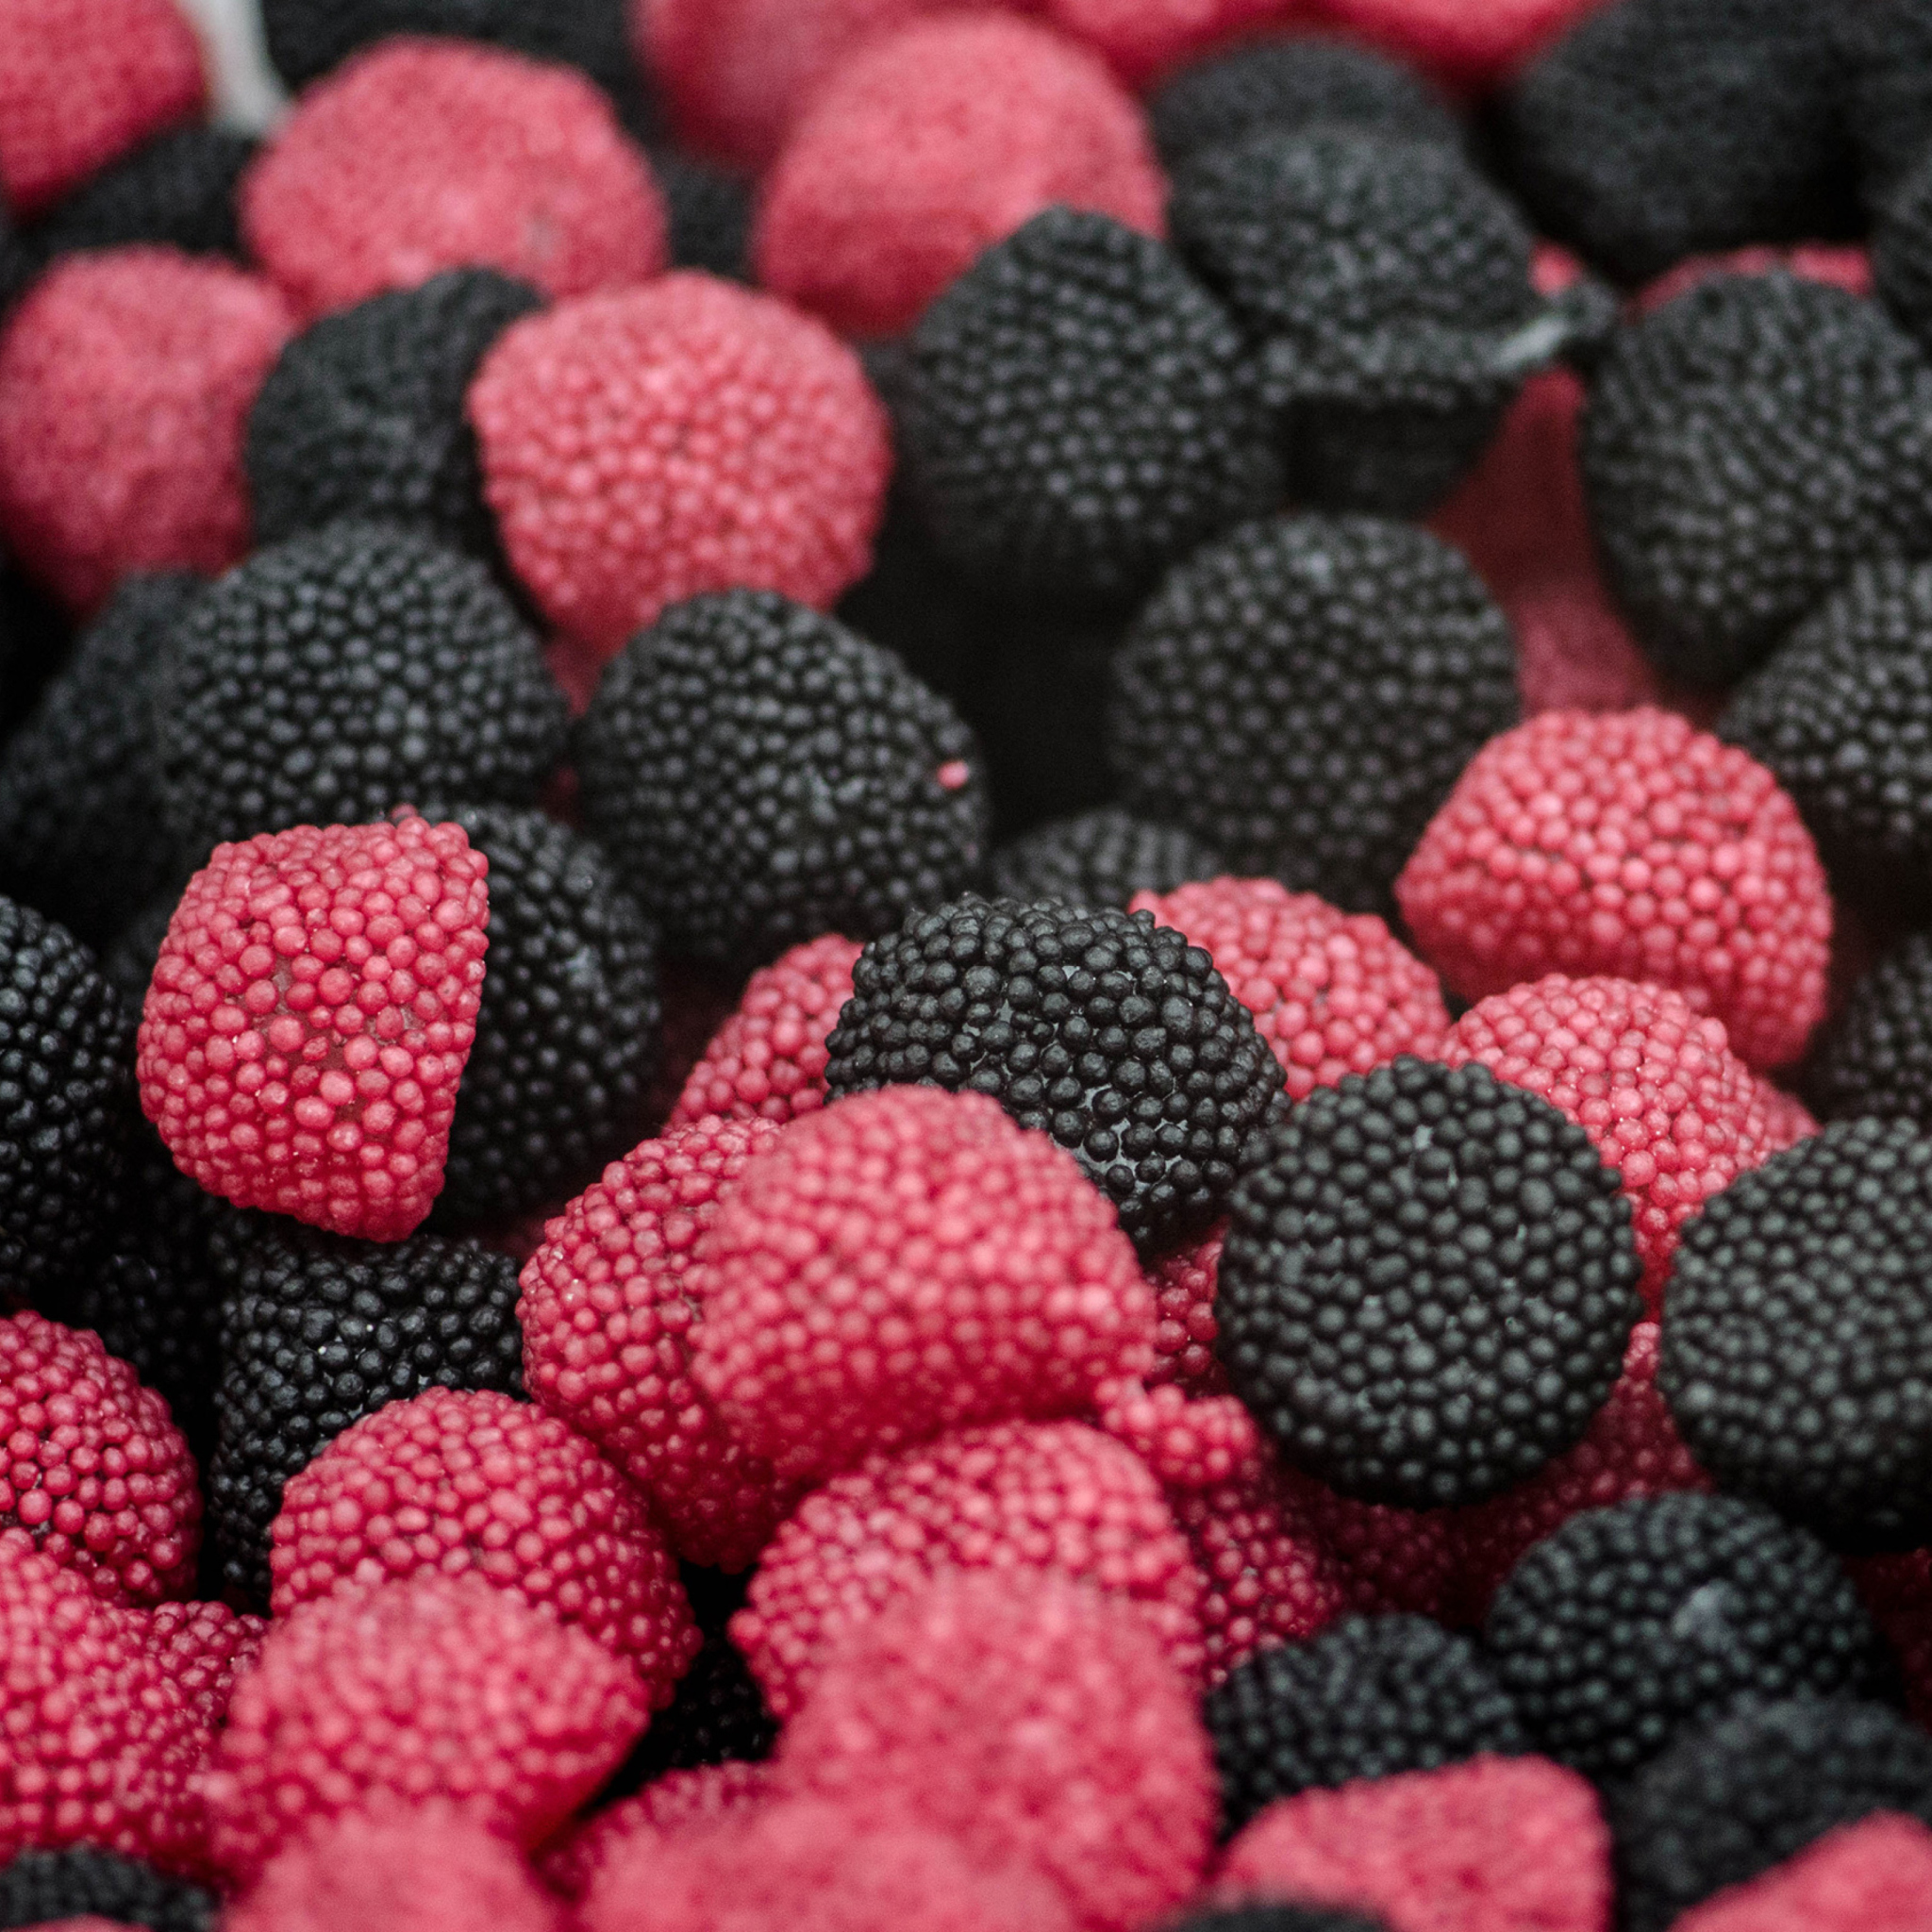 Das Pink and Black Berries Candies Wallpaper 2048x2048